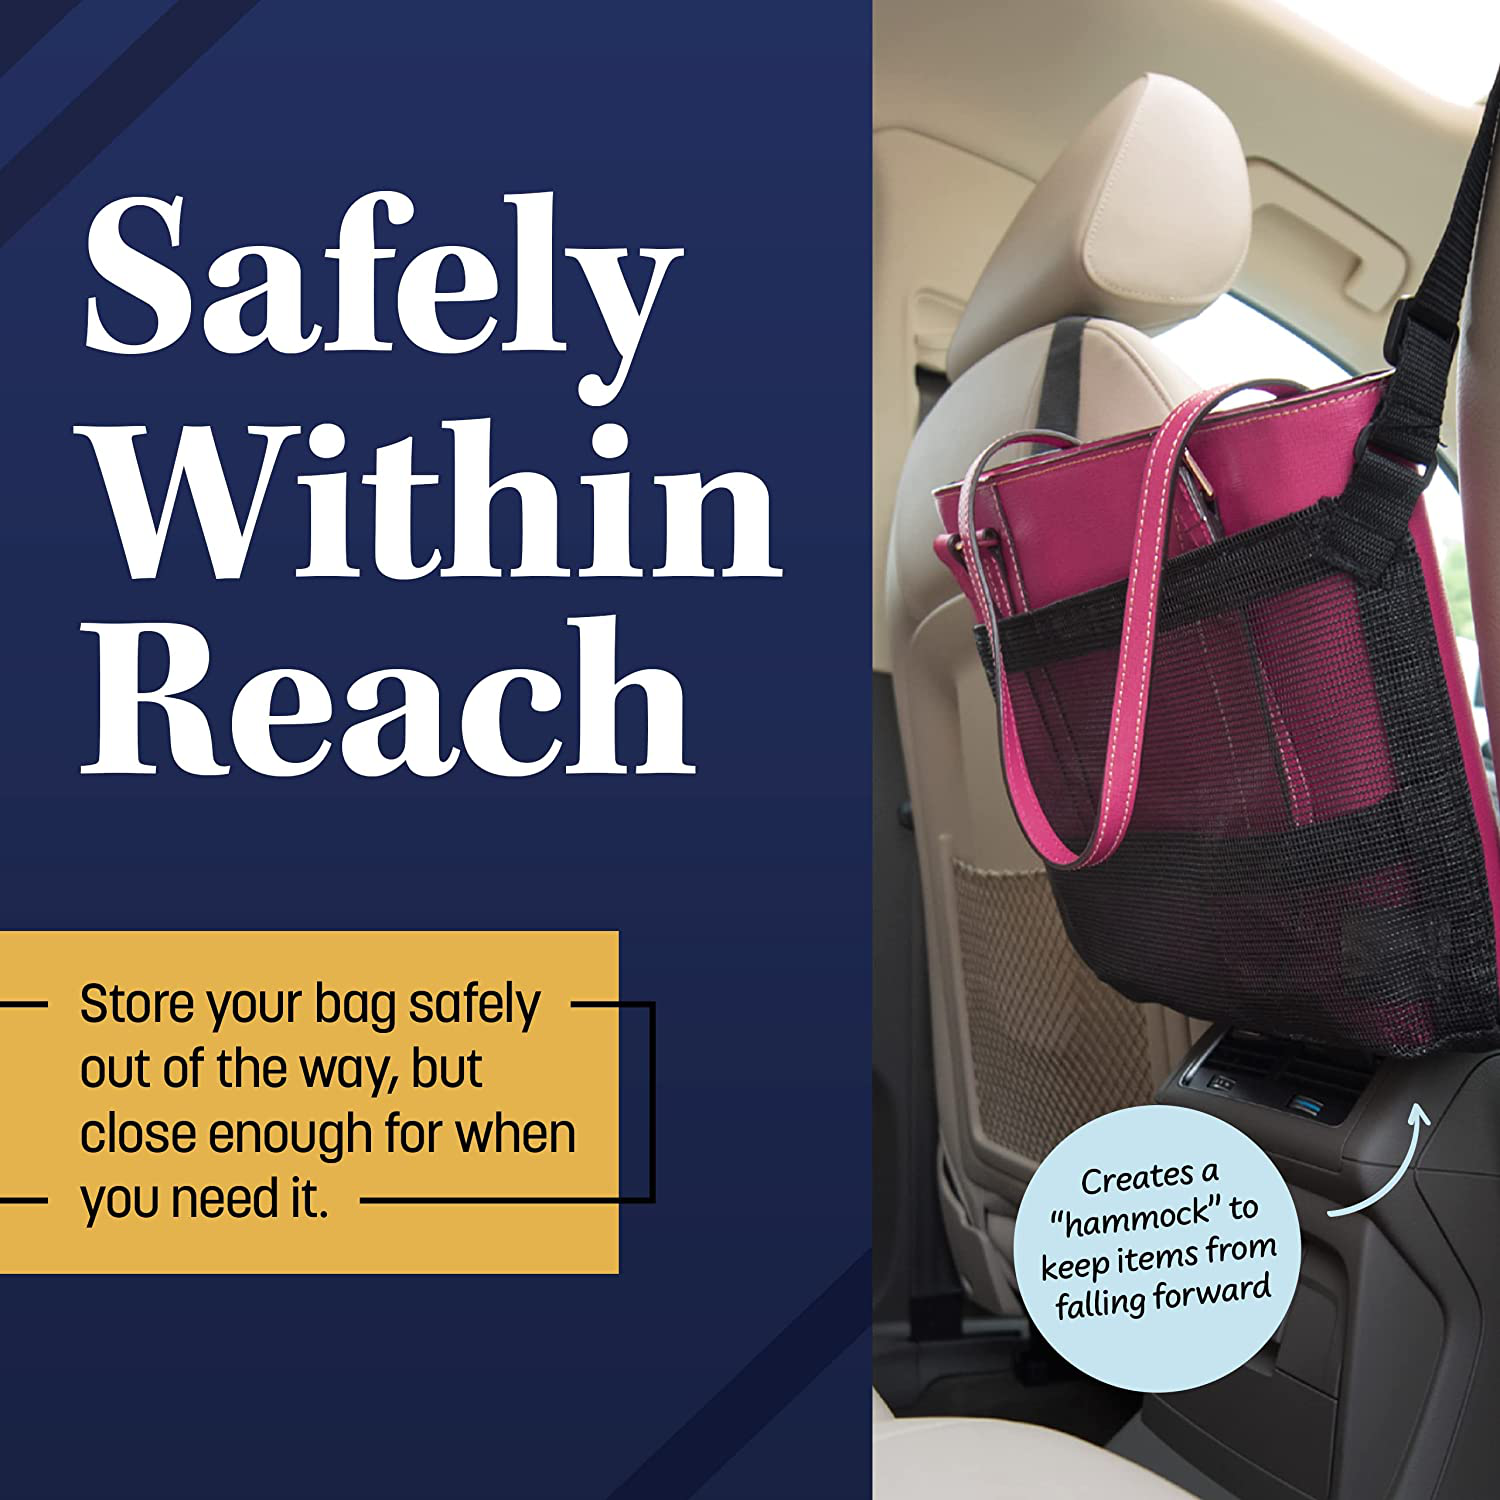 Car Cache Purse Holder for Car - Net Pocket Organizer for Handbag Storage between Seats - Dog Barrier - Car Accessories for Women